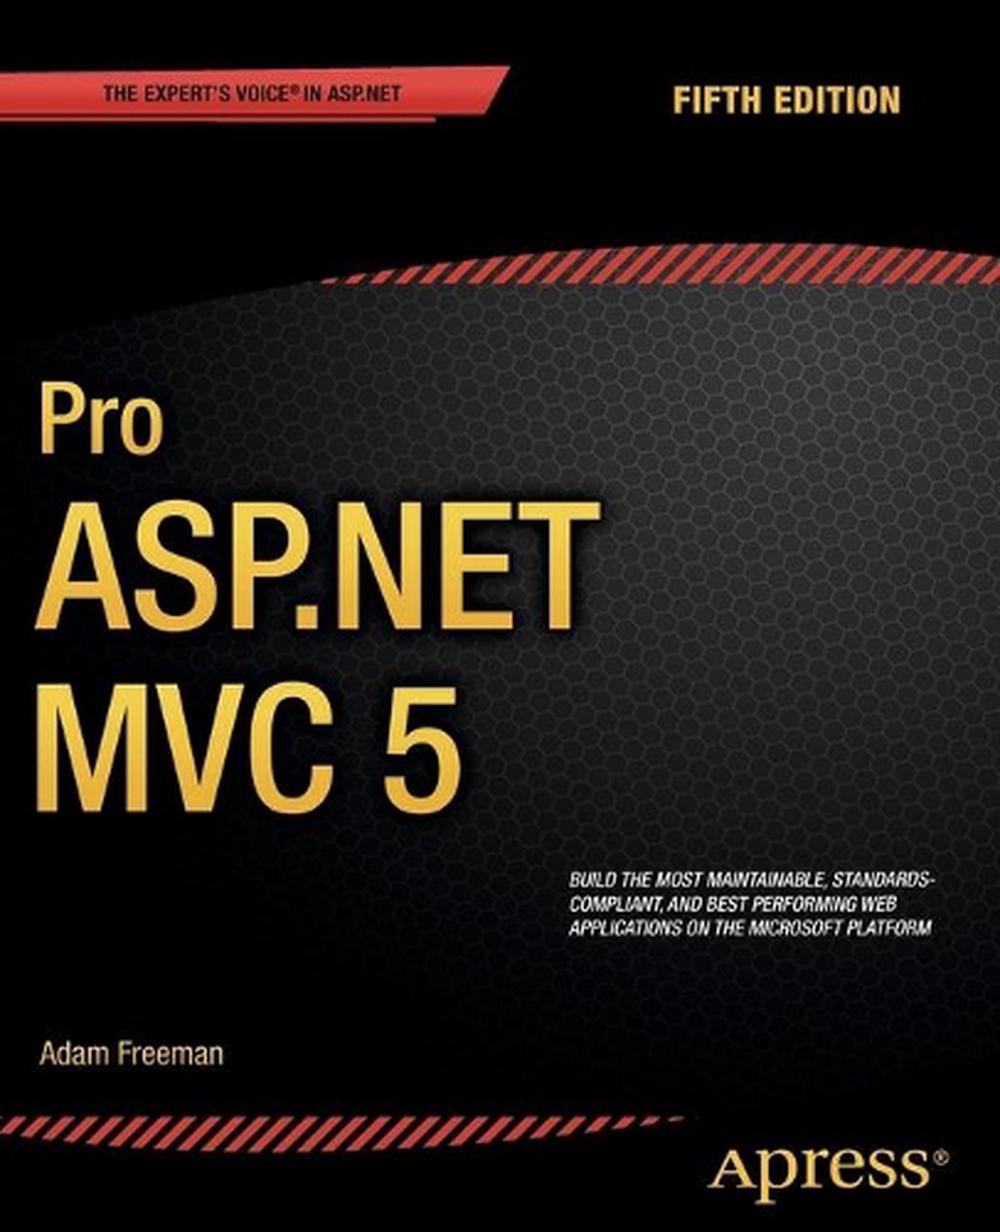 Single page application in asp.net mvc 5